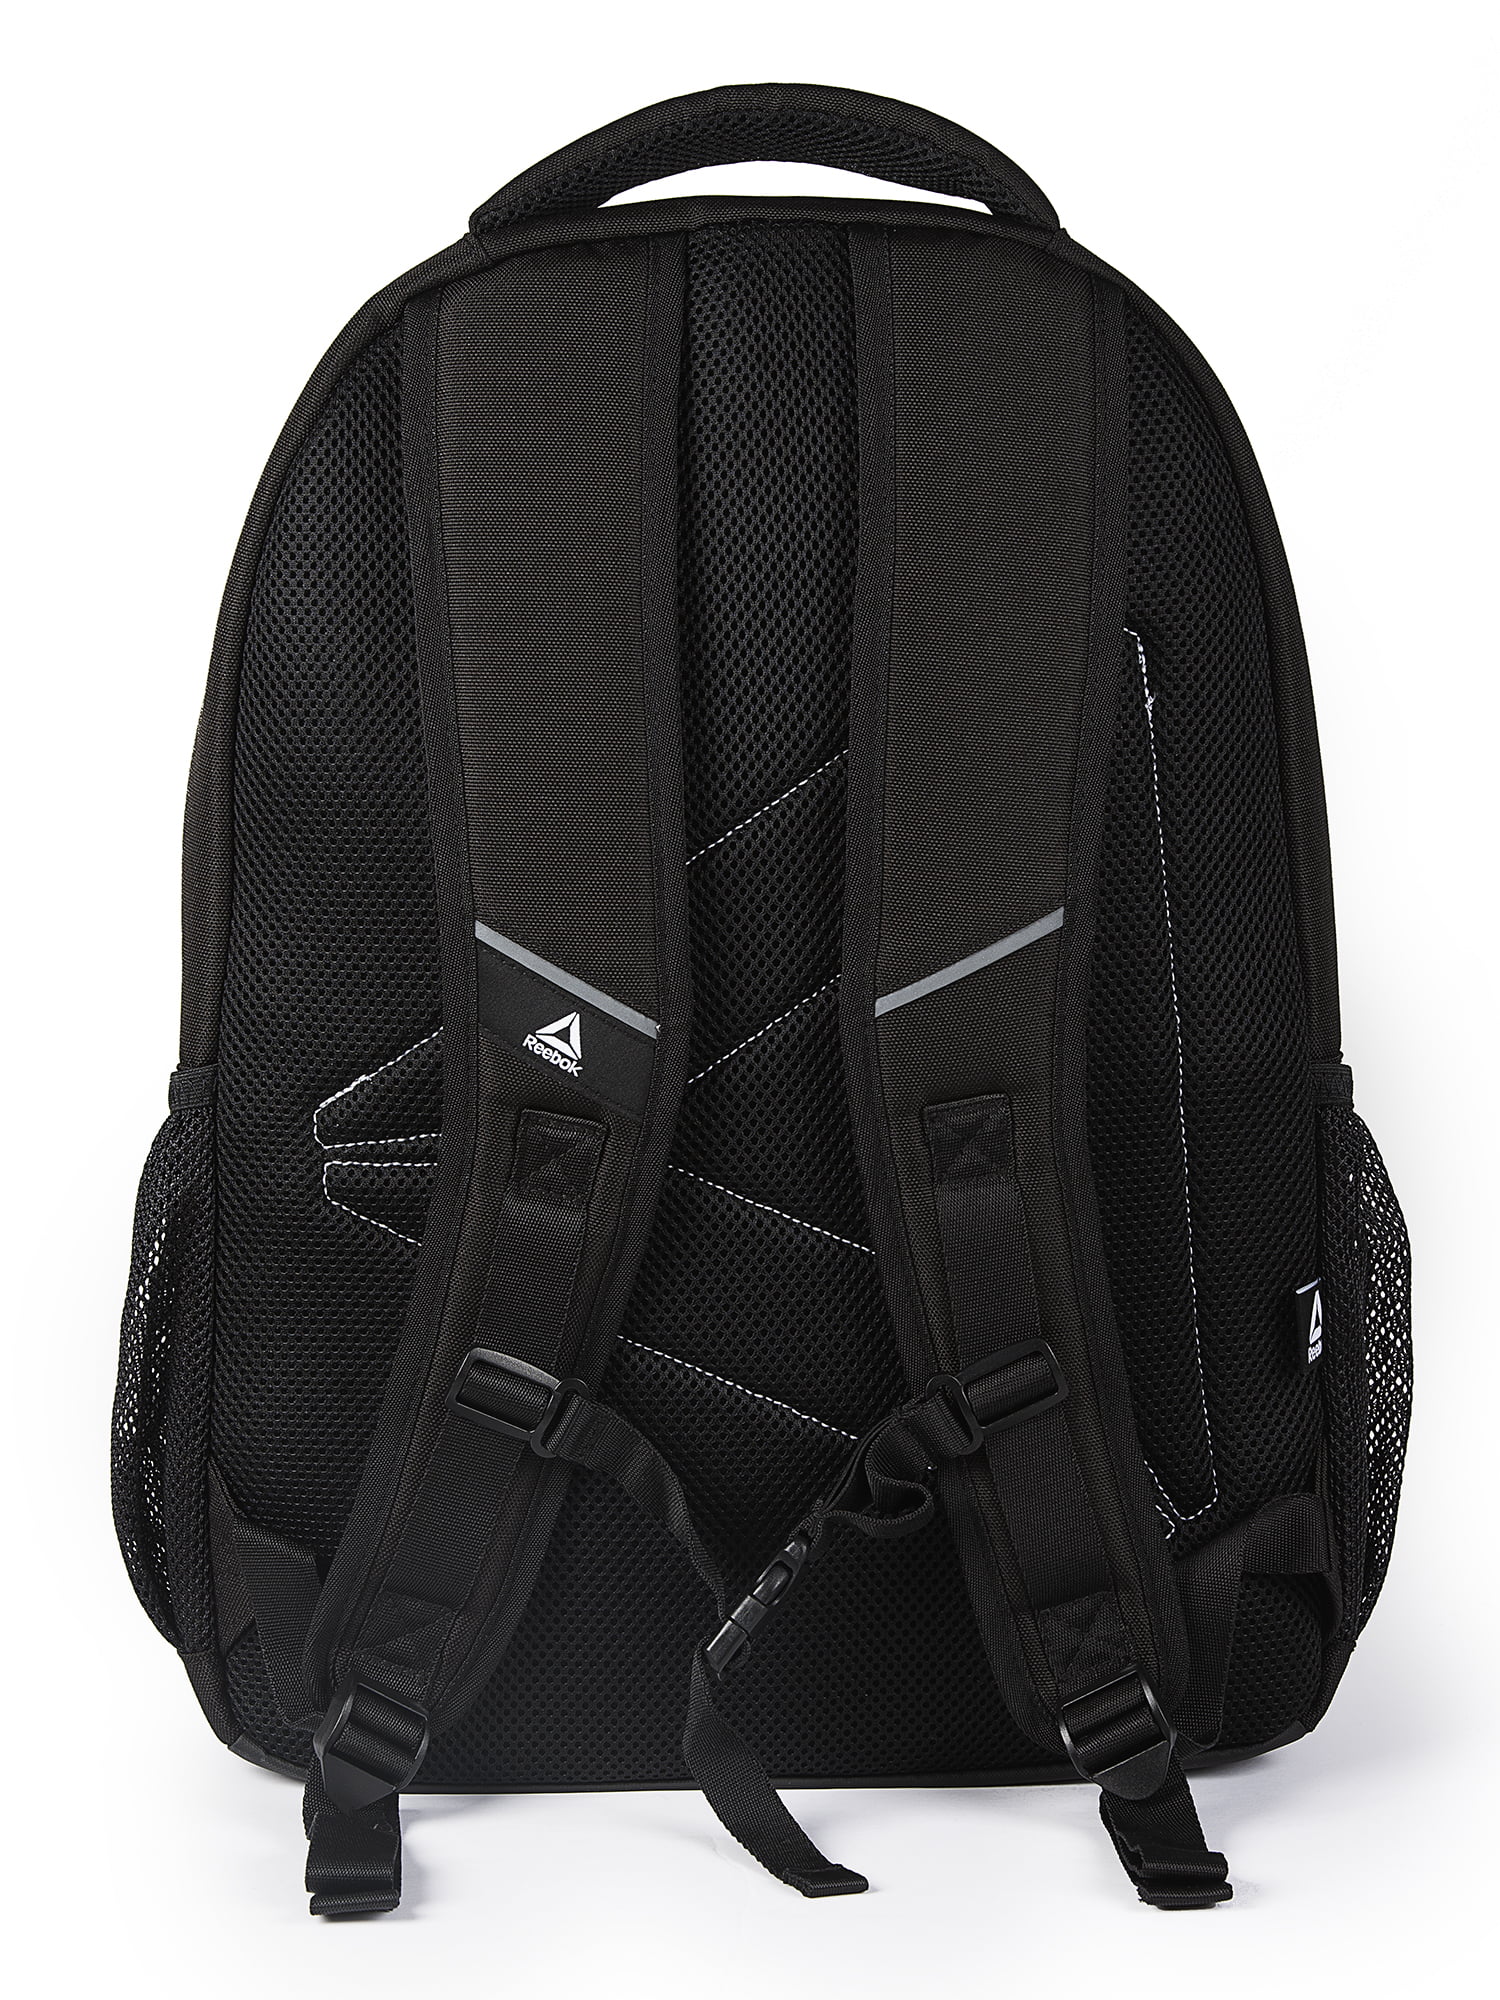 Reebok Unisex Backpack in Black Size N Sz - Training Accessories